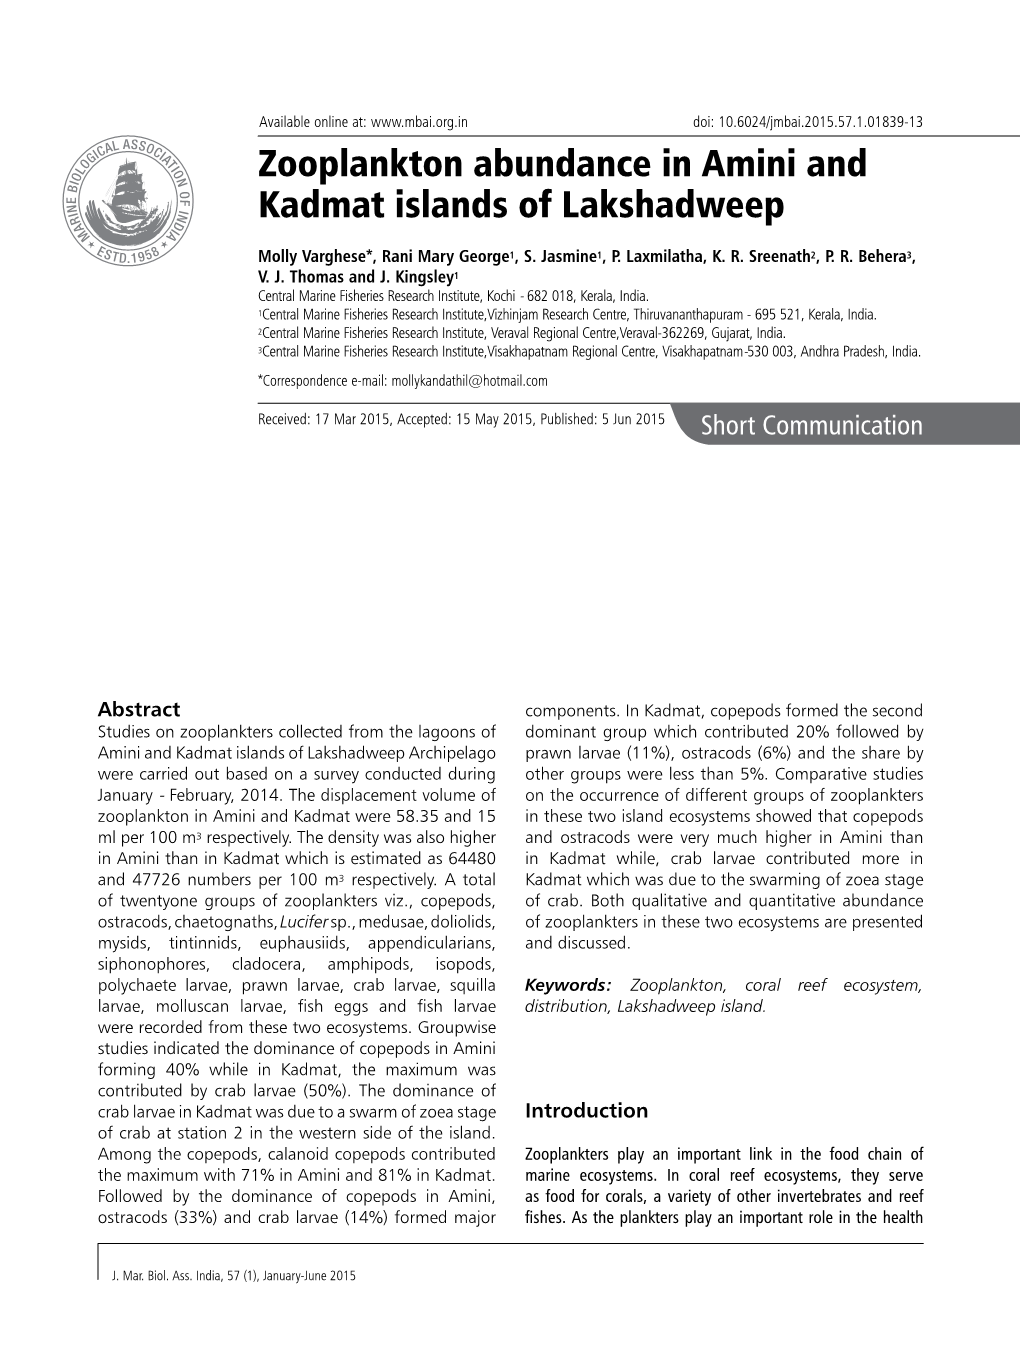 Zooplankton Abundance in Amini and Kadmat Islands of Lakshadweep